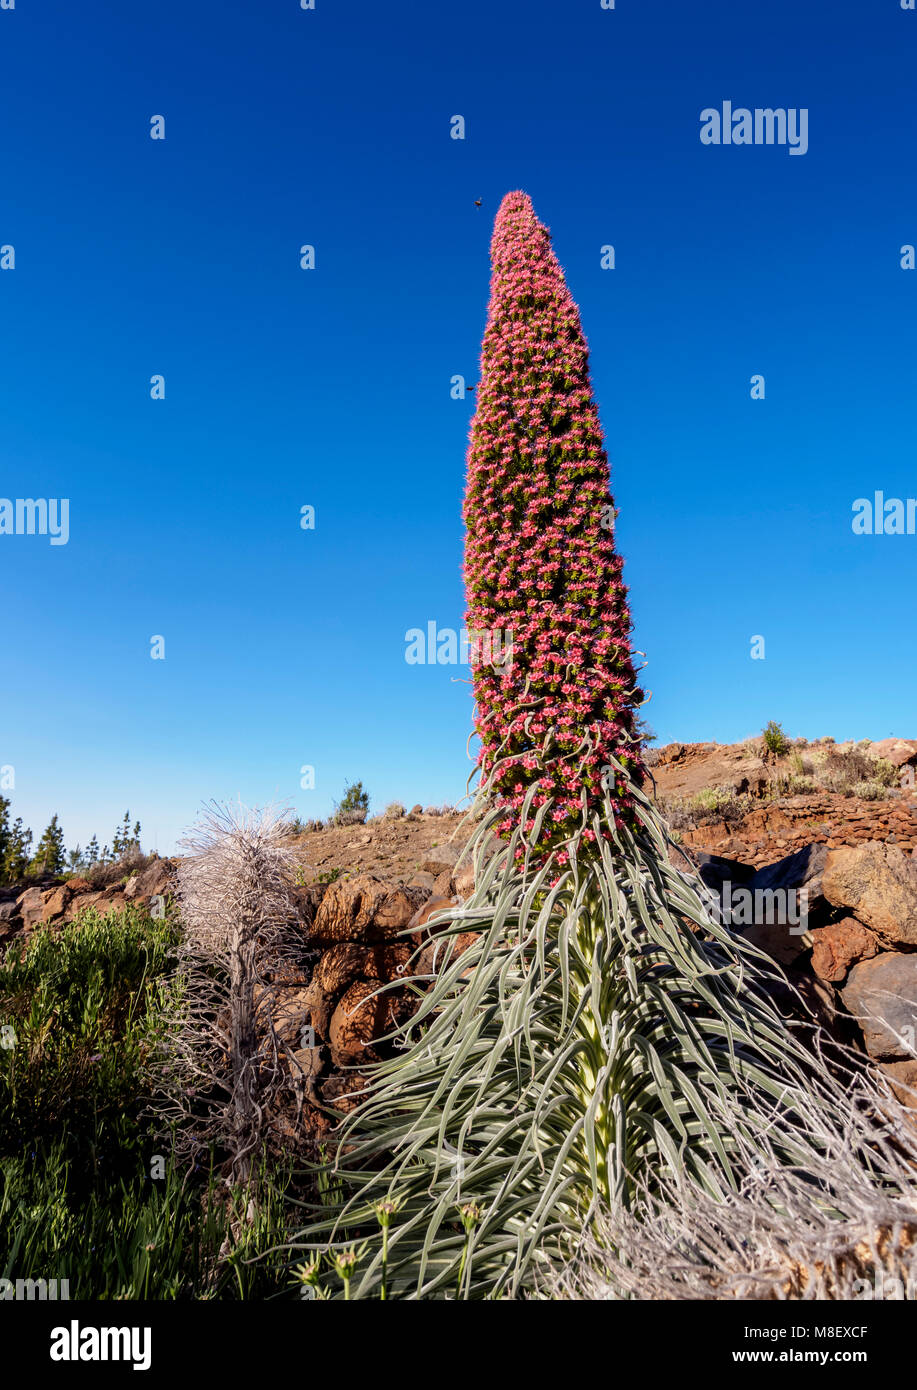 Tajinaste Rojo(Echium Wildpretii), endemic plant, Corona Forestal Natural Park, Vilaflor, Tenerife Island, Canary Islands, Spain Stock Photo